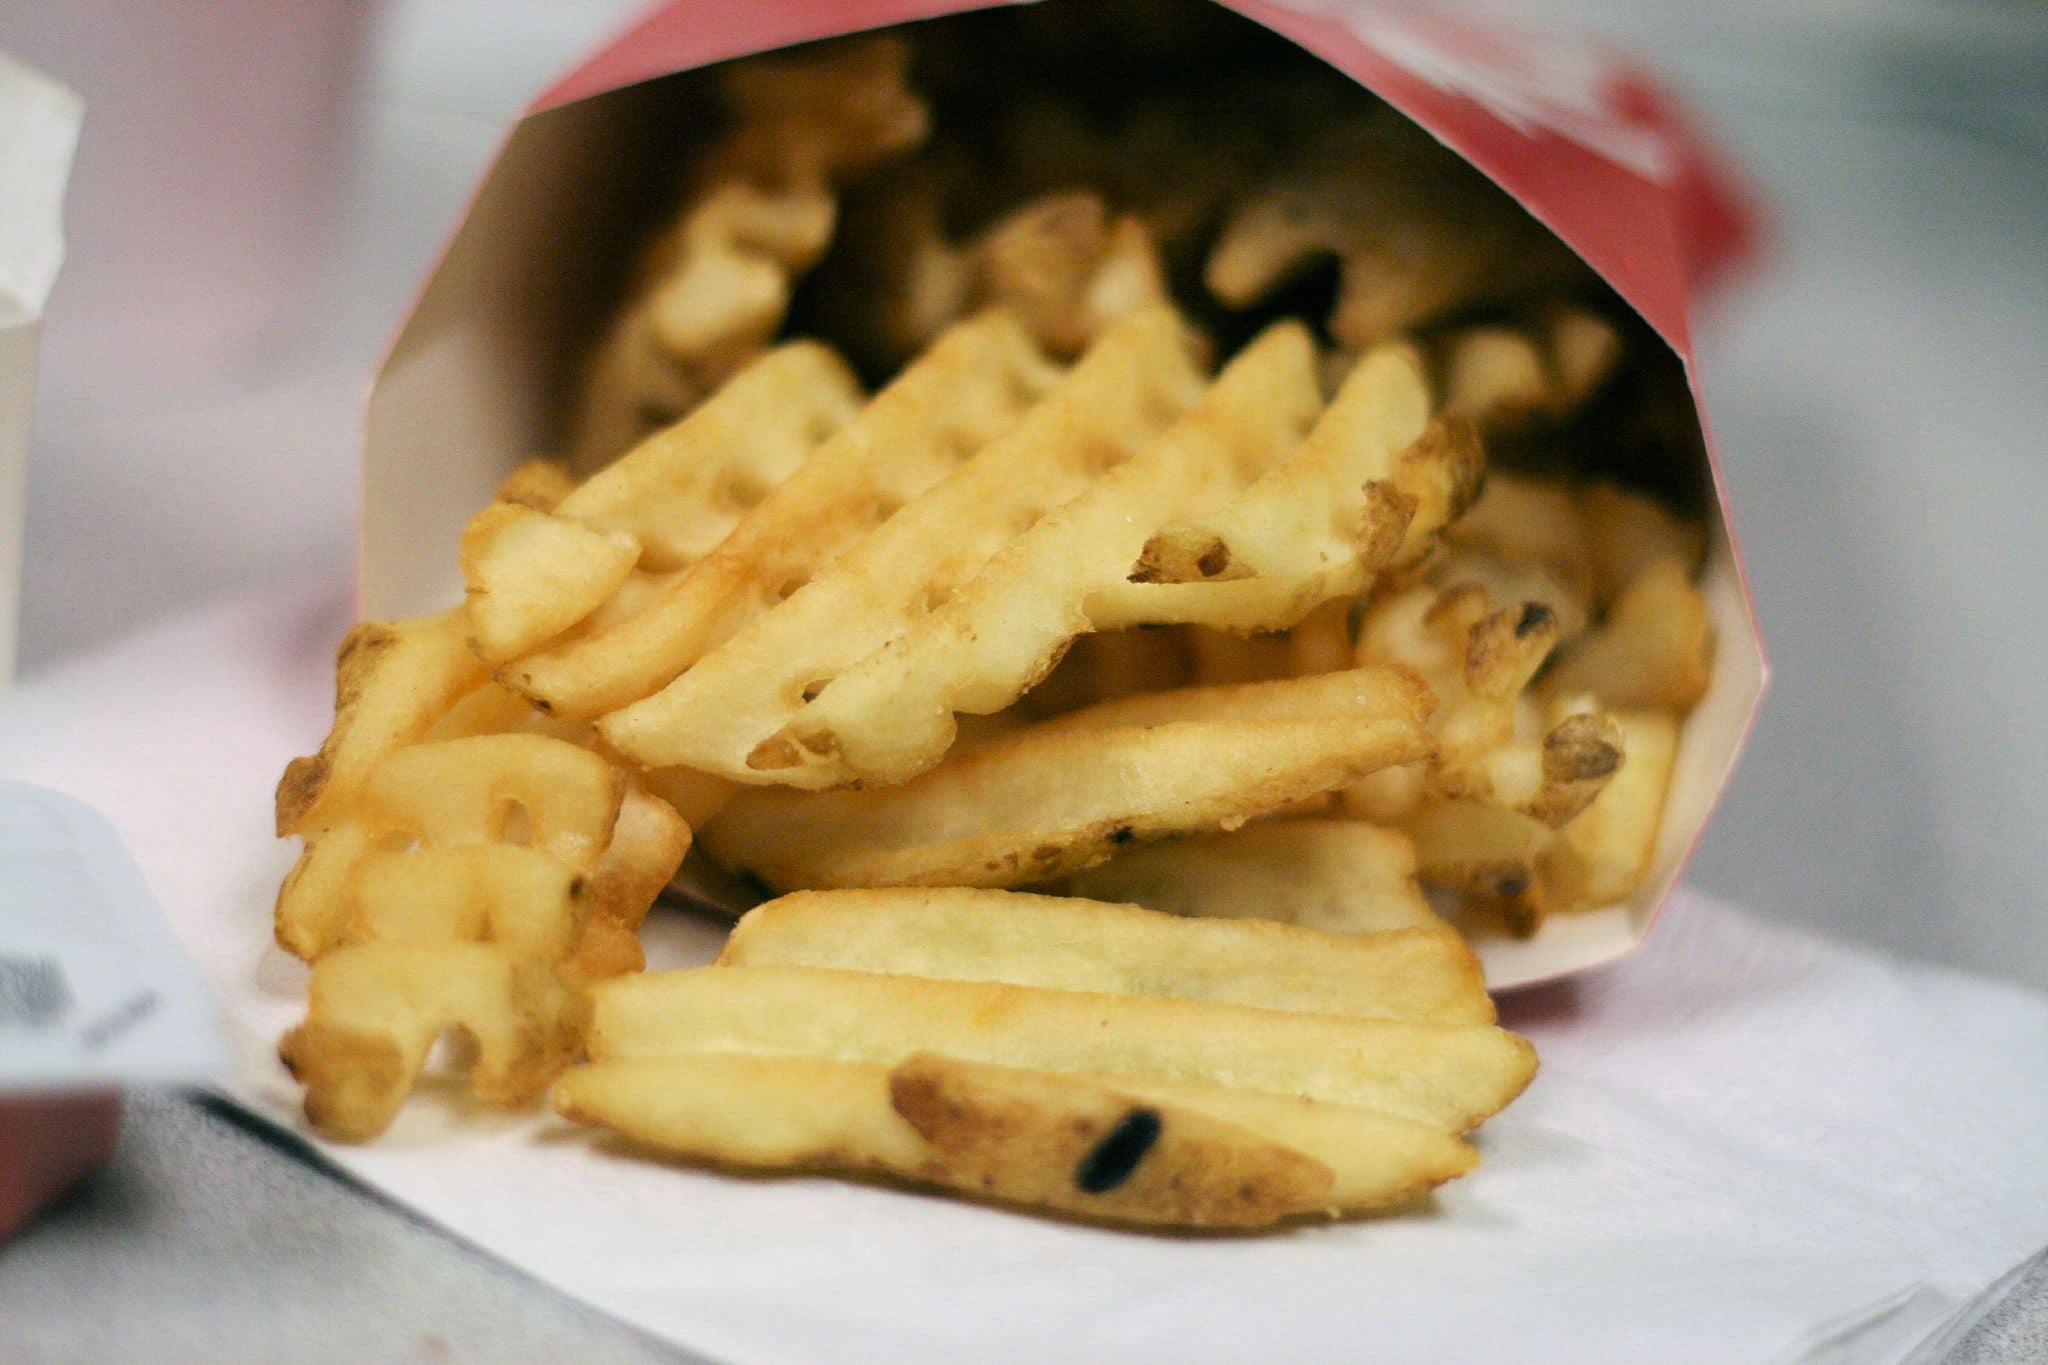 Chick-fil-A Waffle Fries Recipe